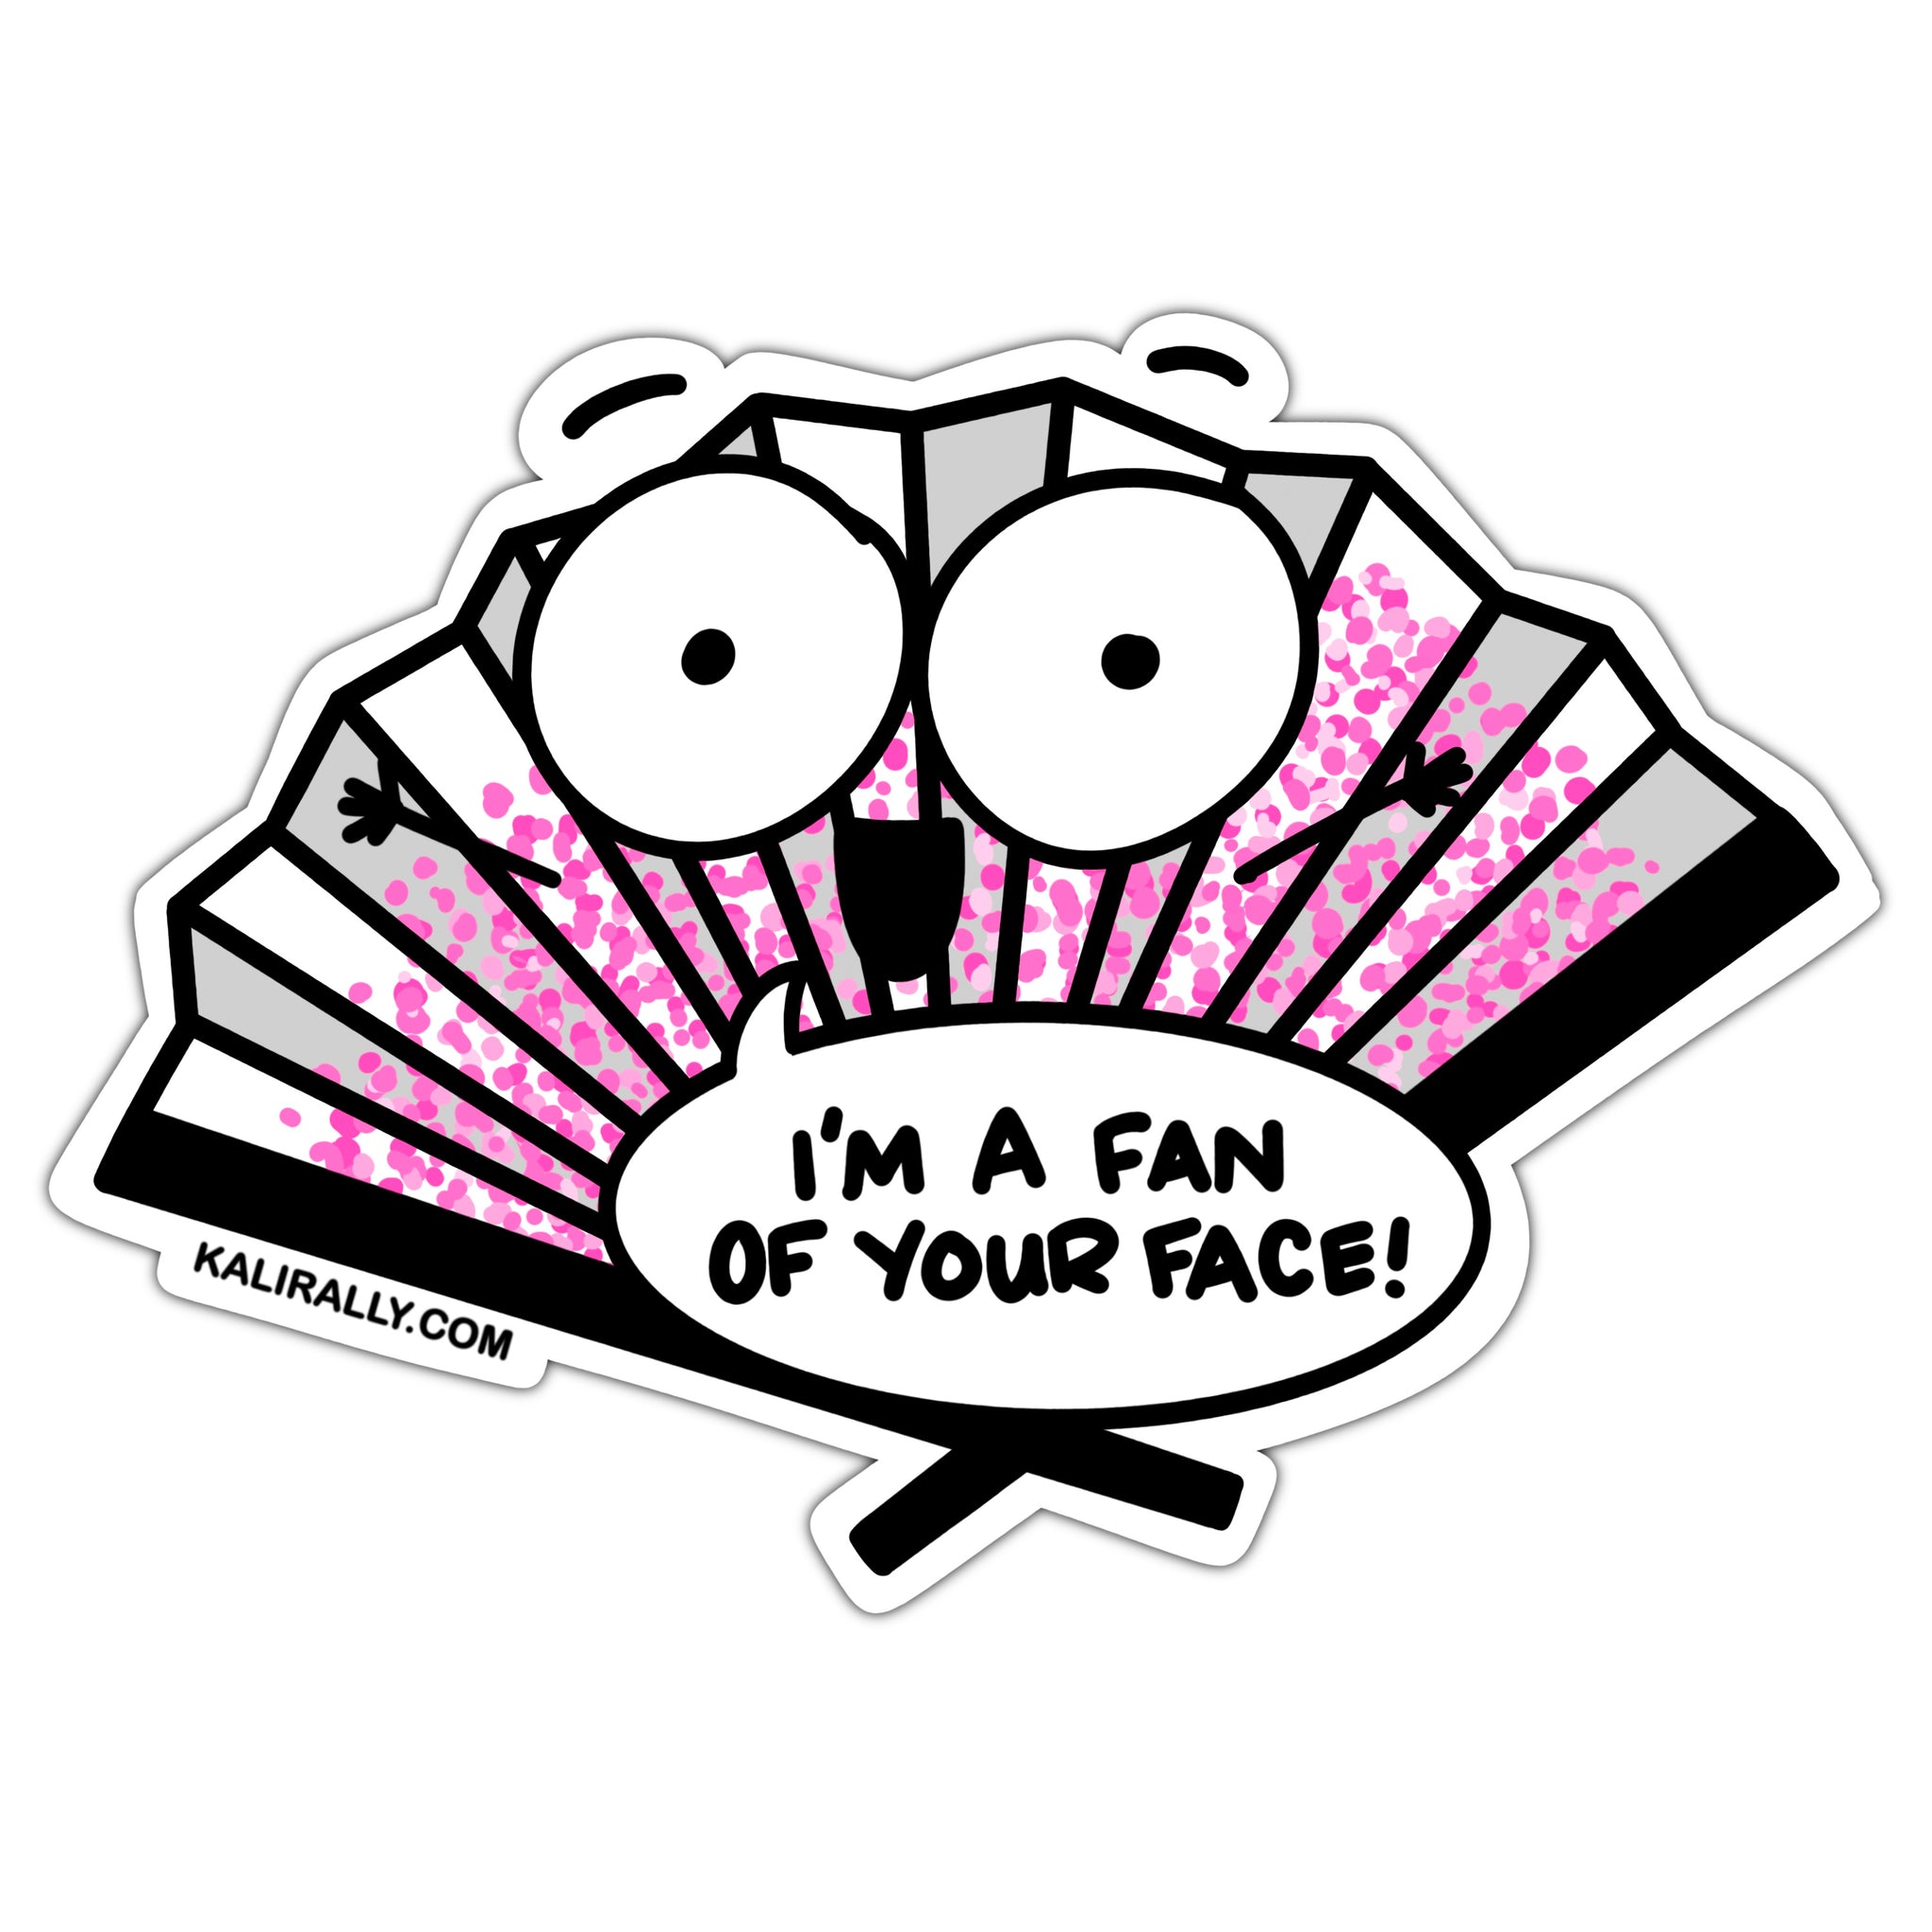 Funny I'm a fan of your face sticker, silly Cherry Blossom handheld fan decal, friend sticker, waterproof vinyl sticker